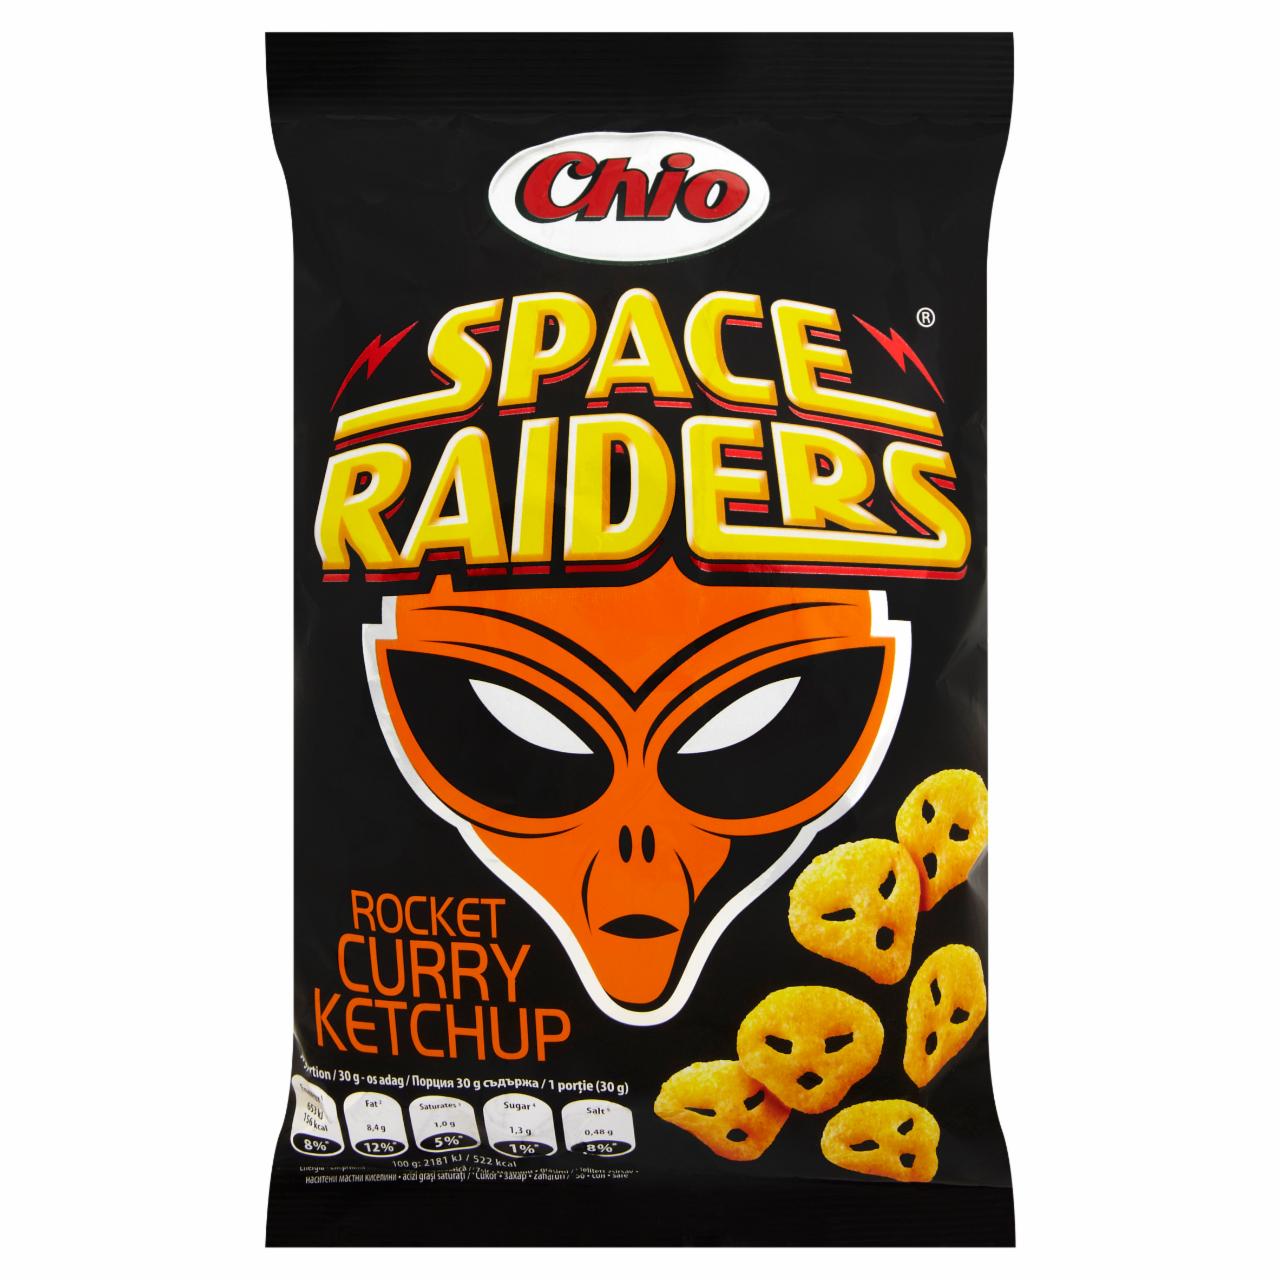 Képek - Chio Space Raiders curry ketchup ízű kukoricasnack 40 g